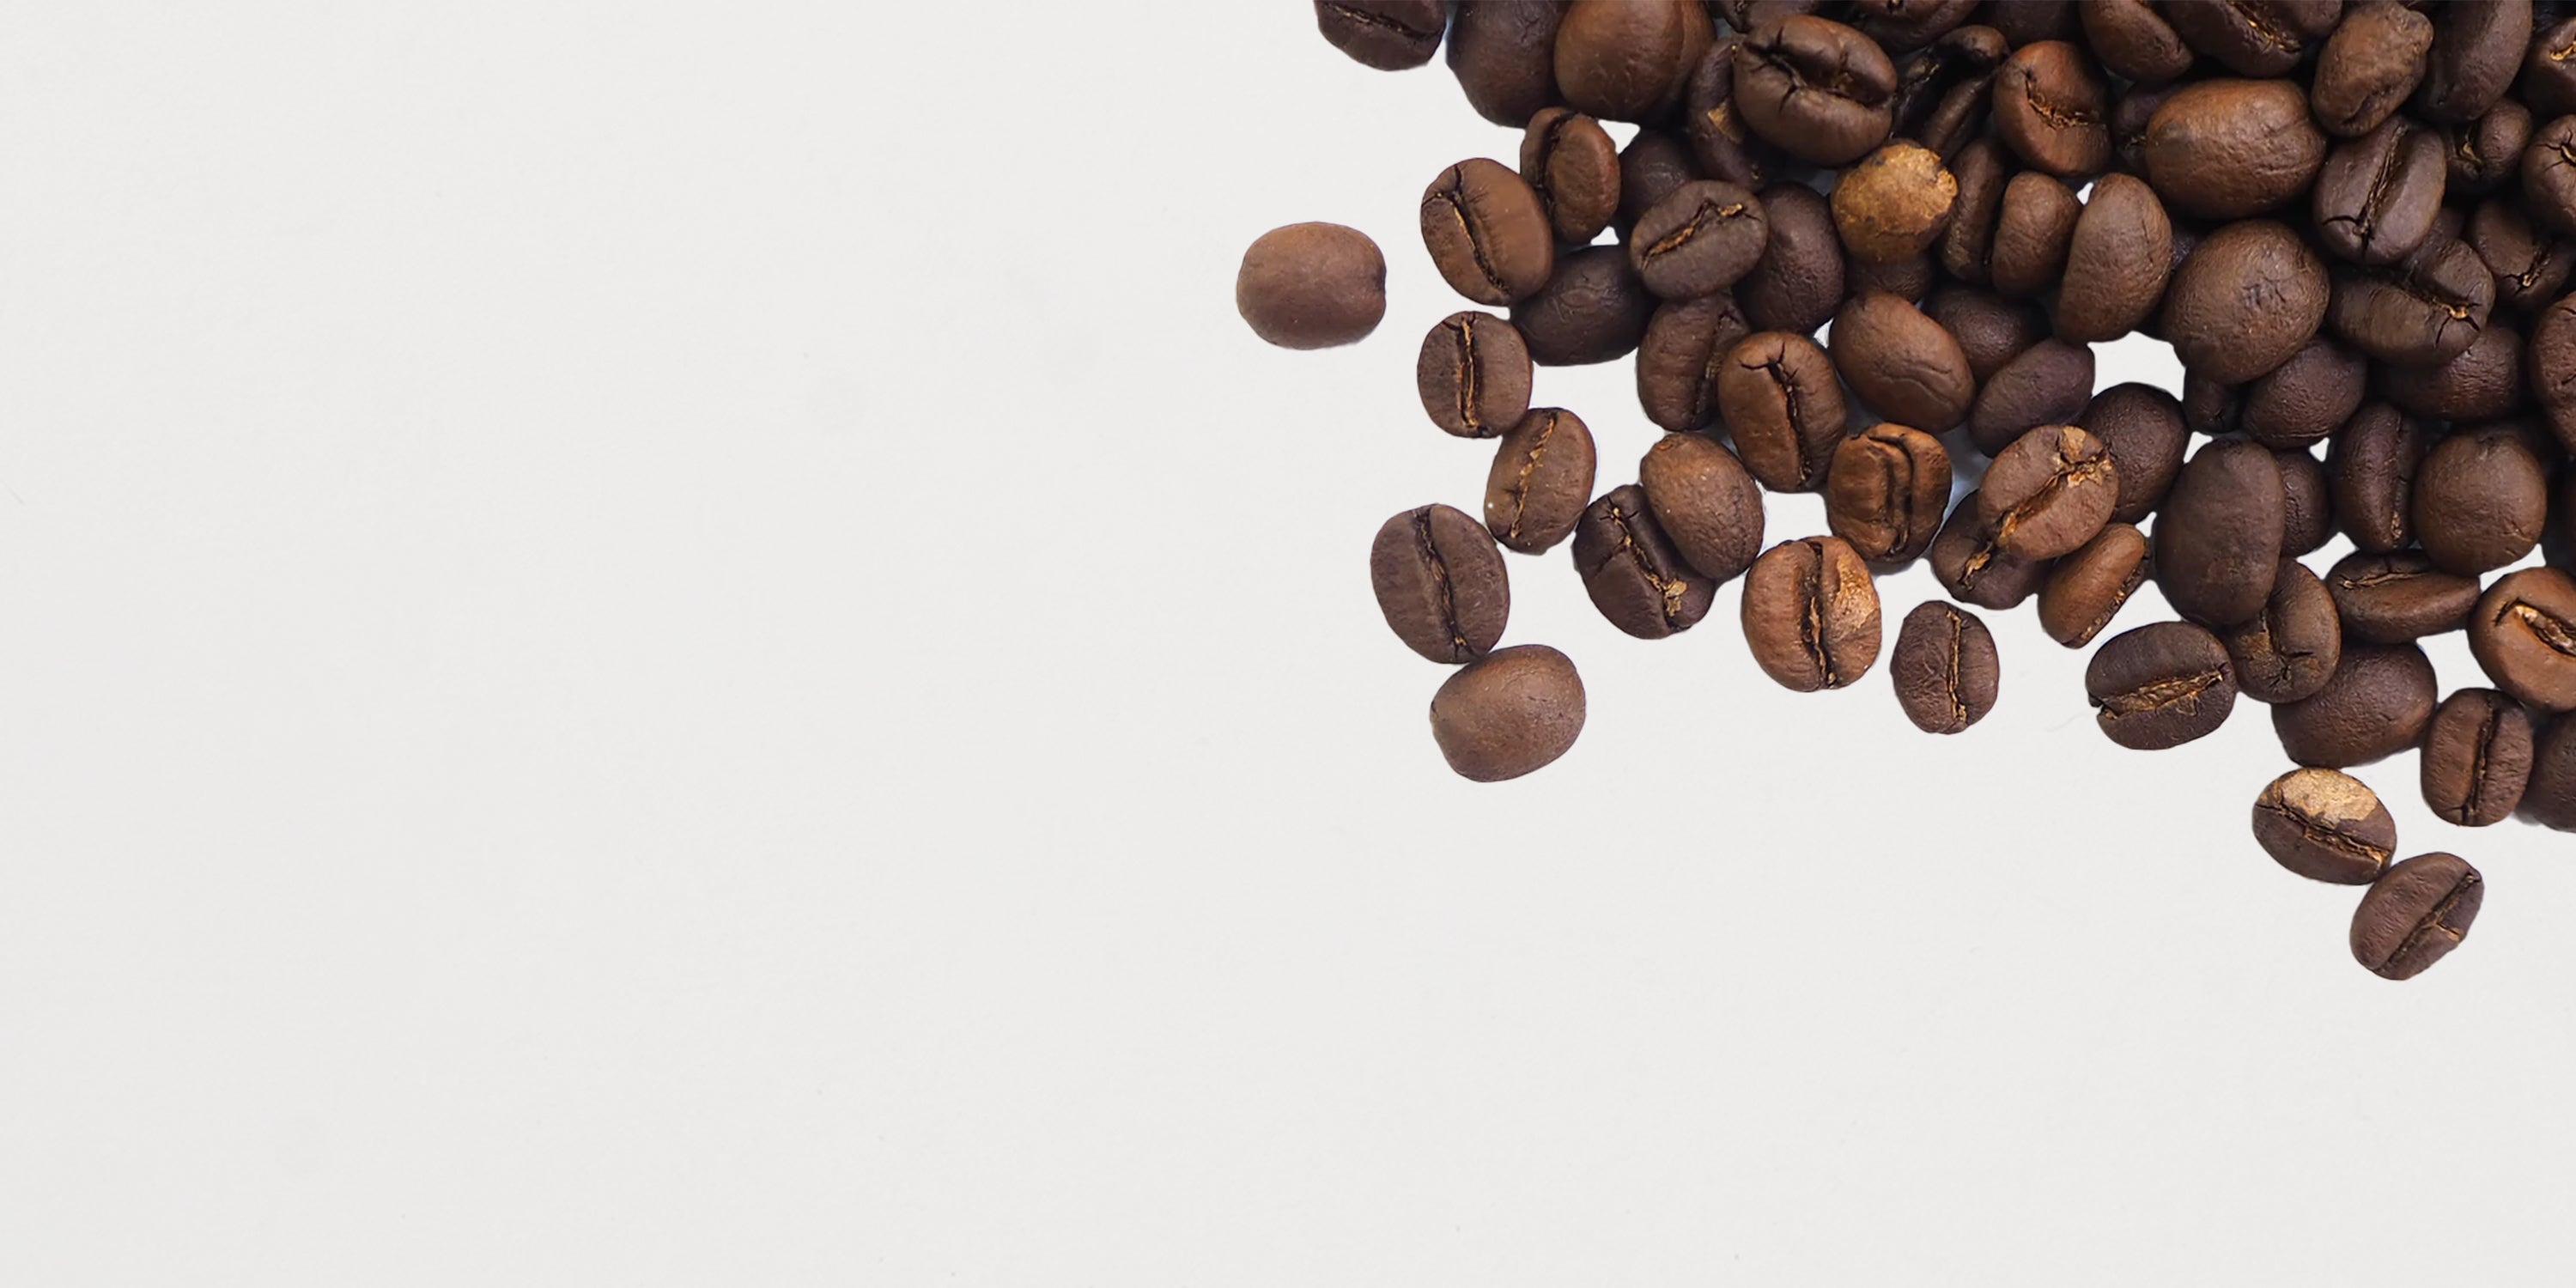 Karajoz Coffee New Zealand Small Batch Freshly Roasted Coffee Beans Plunger Espresso Source shade grown coffee